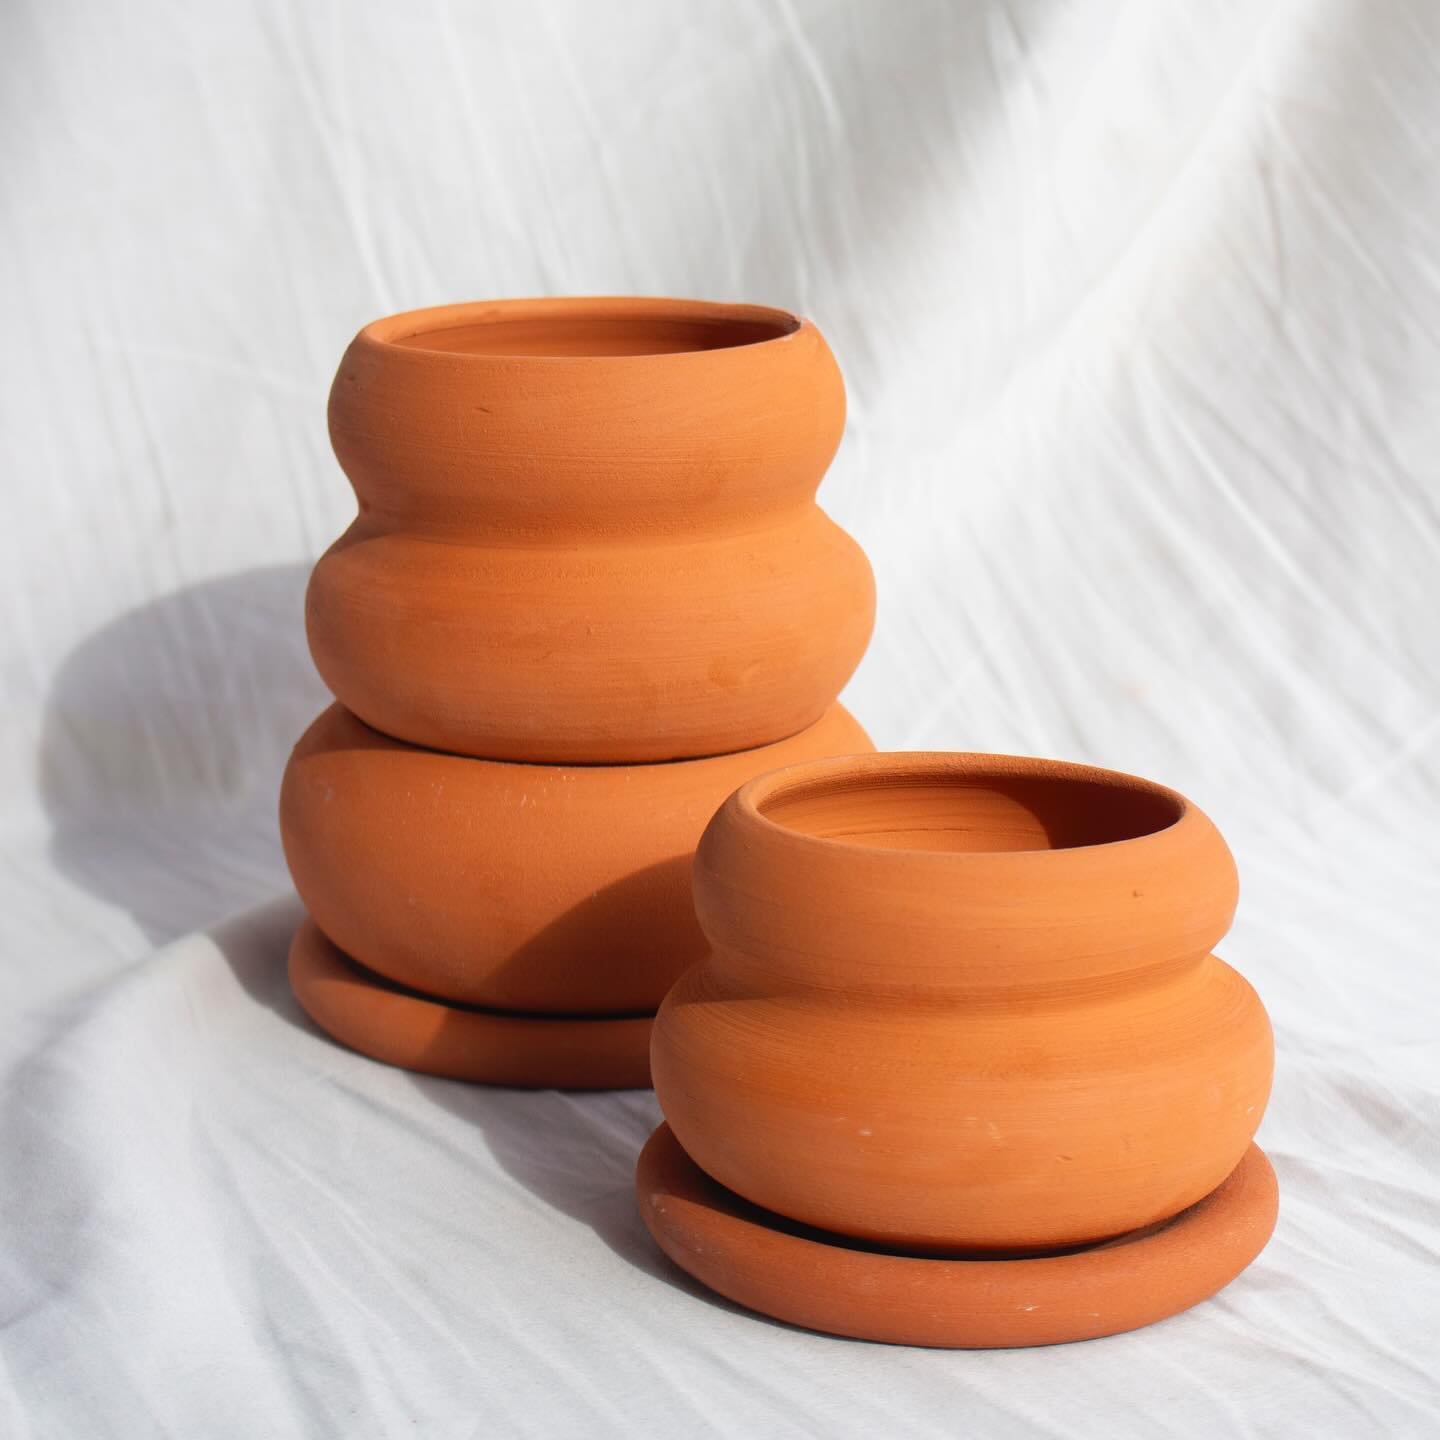 Of course I had to try and make some bubble plant pots 🫧
.
.
.
#terracotta #wheelthrown #plantpots #pottery #ceramics #handmade #handmadepottery #modernceramics #handmadeceramics #yeg #yegmade #yegdesign #yegmaker #yegarts #visualvibes #madeincanada